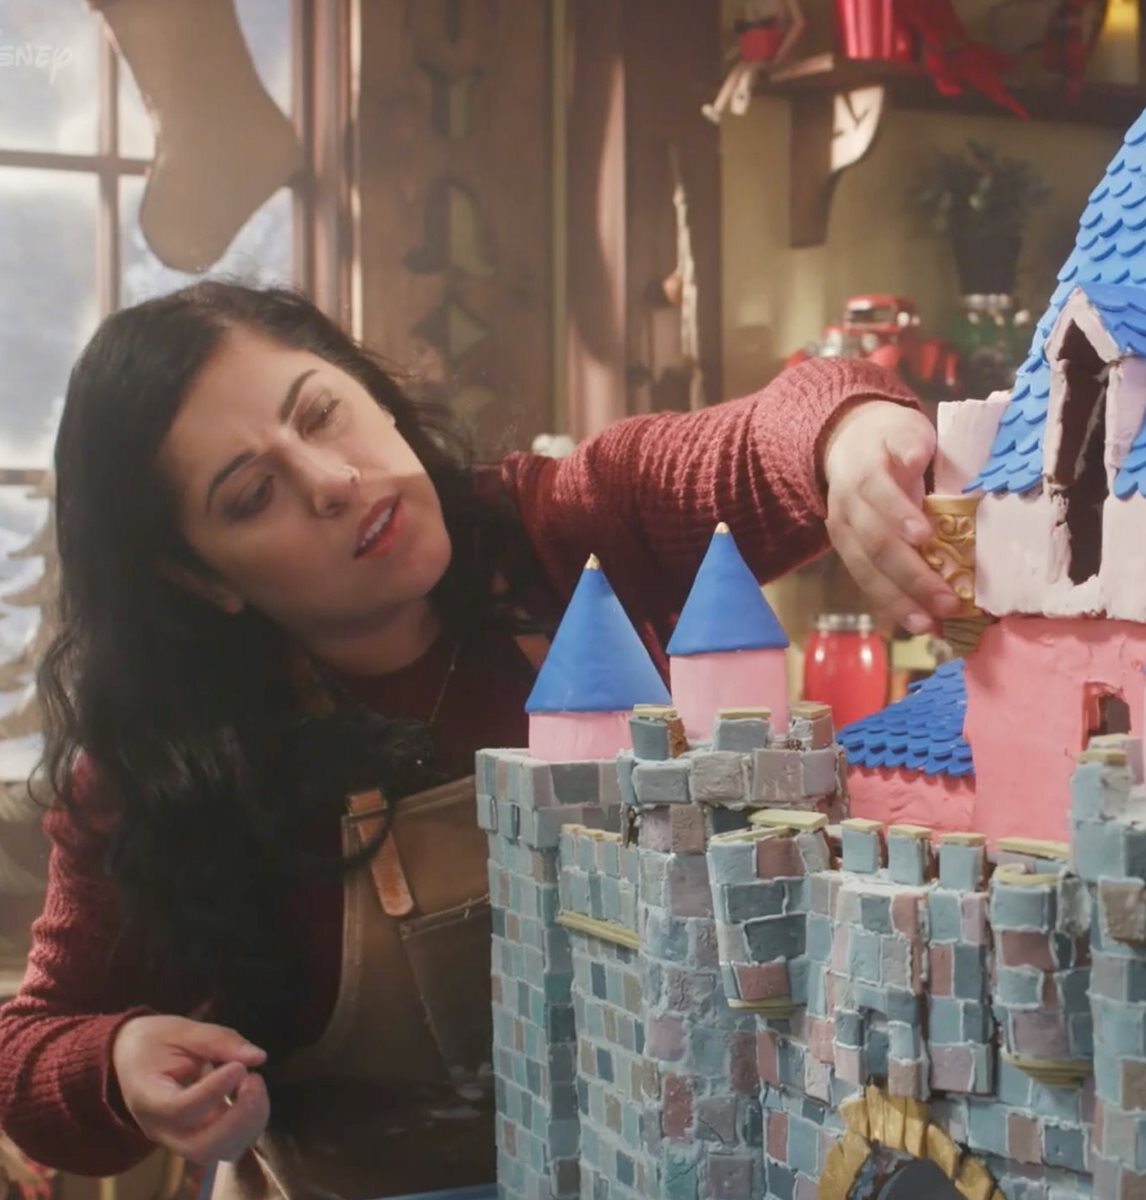 Disney Sleeping Beauty Castle Gingerbread House | Branded Video Los Angeles Hair and Makeup Artist